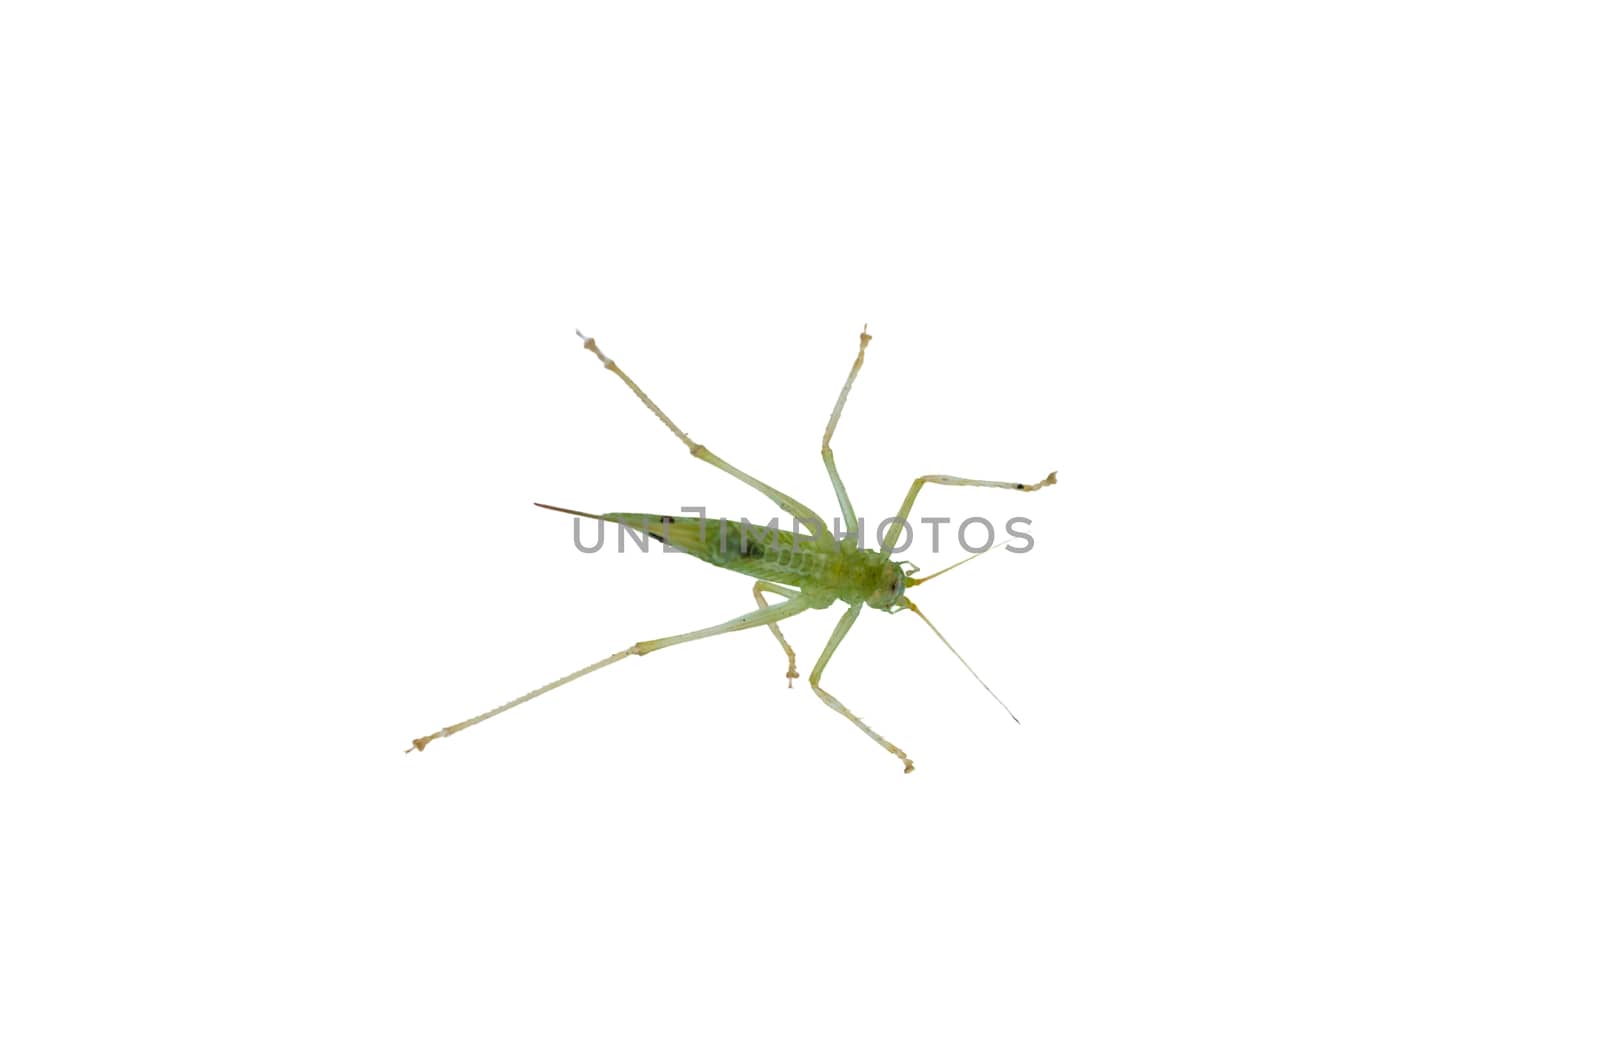 Small grasshopper, Aufnahem from below by JFsPic